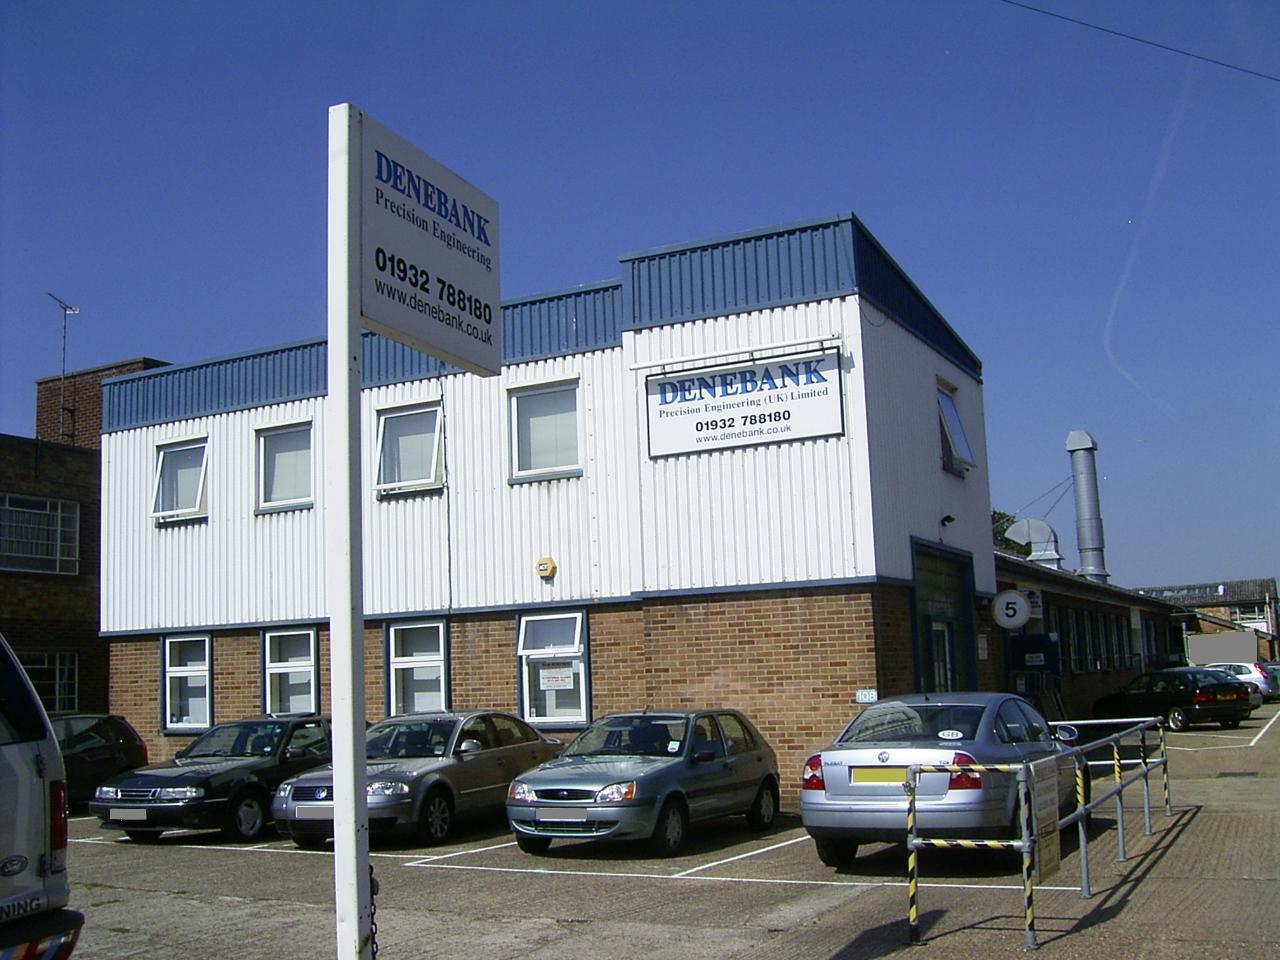 Denebank Precision Engineering (UK) Ltd